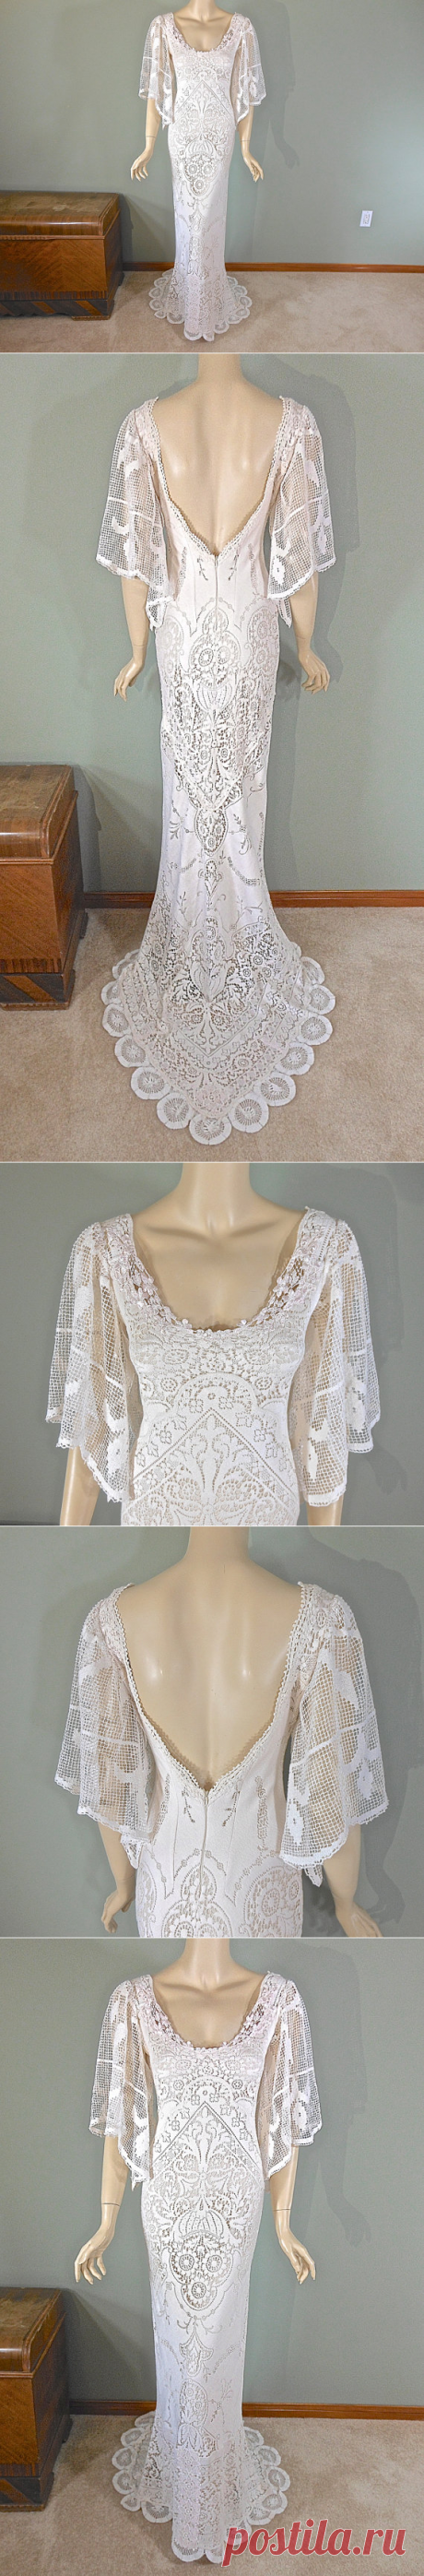 Vintage Inspired wedding dress Bohemian wedding от MuseyClothing